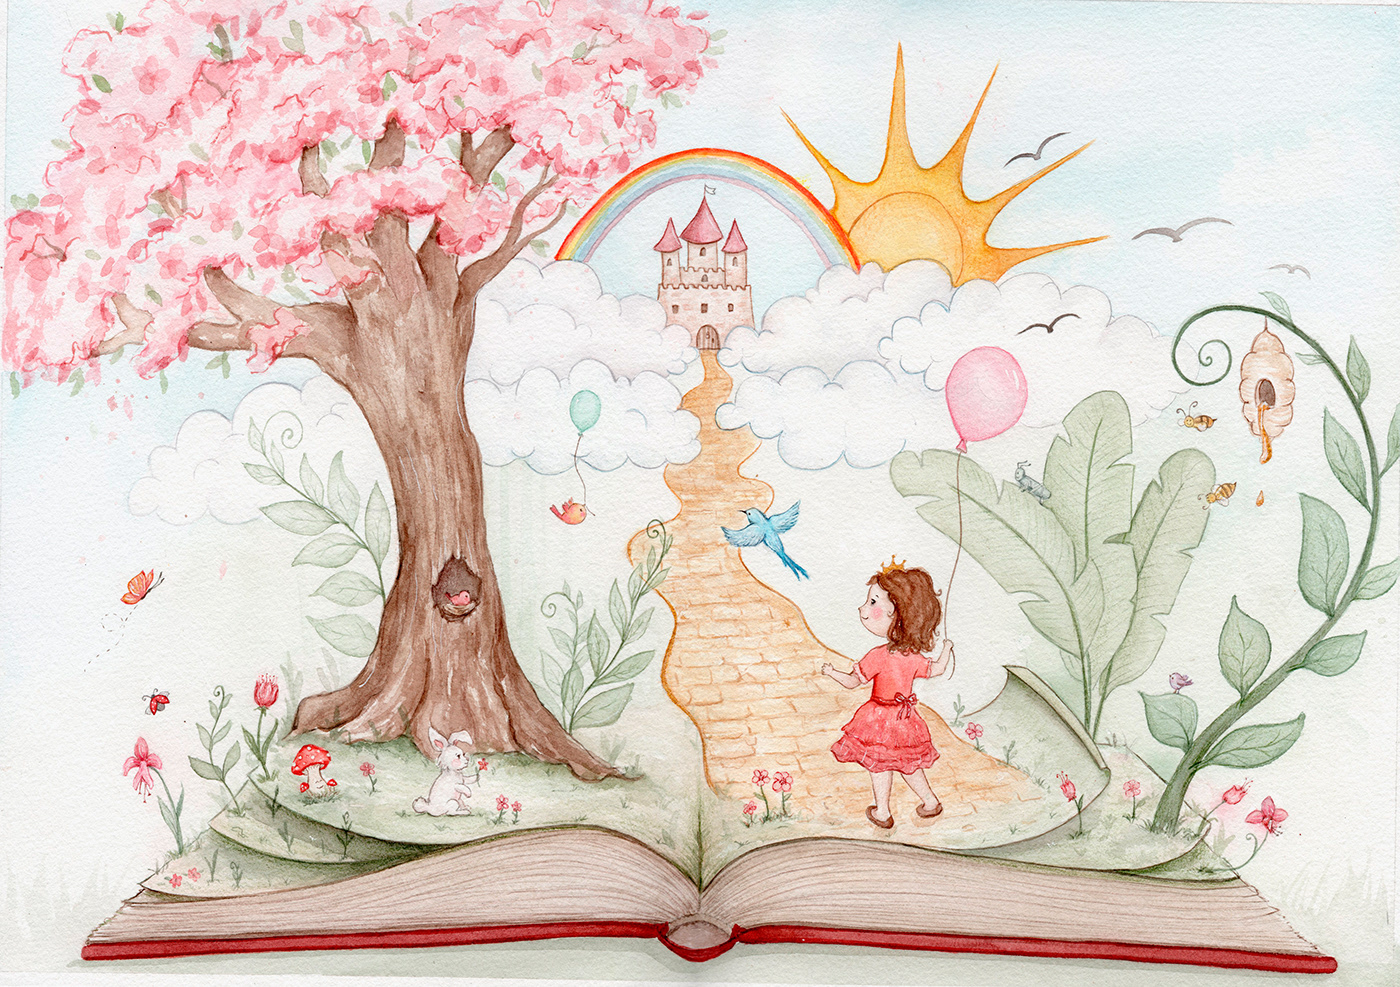 Child art Birthday children illustration Lúdico fantasy Magical books watercolor SKY wizardofoz